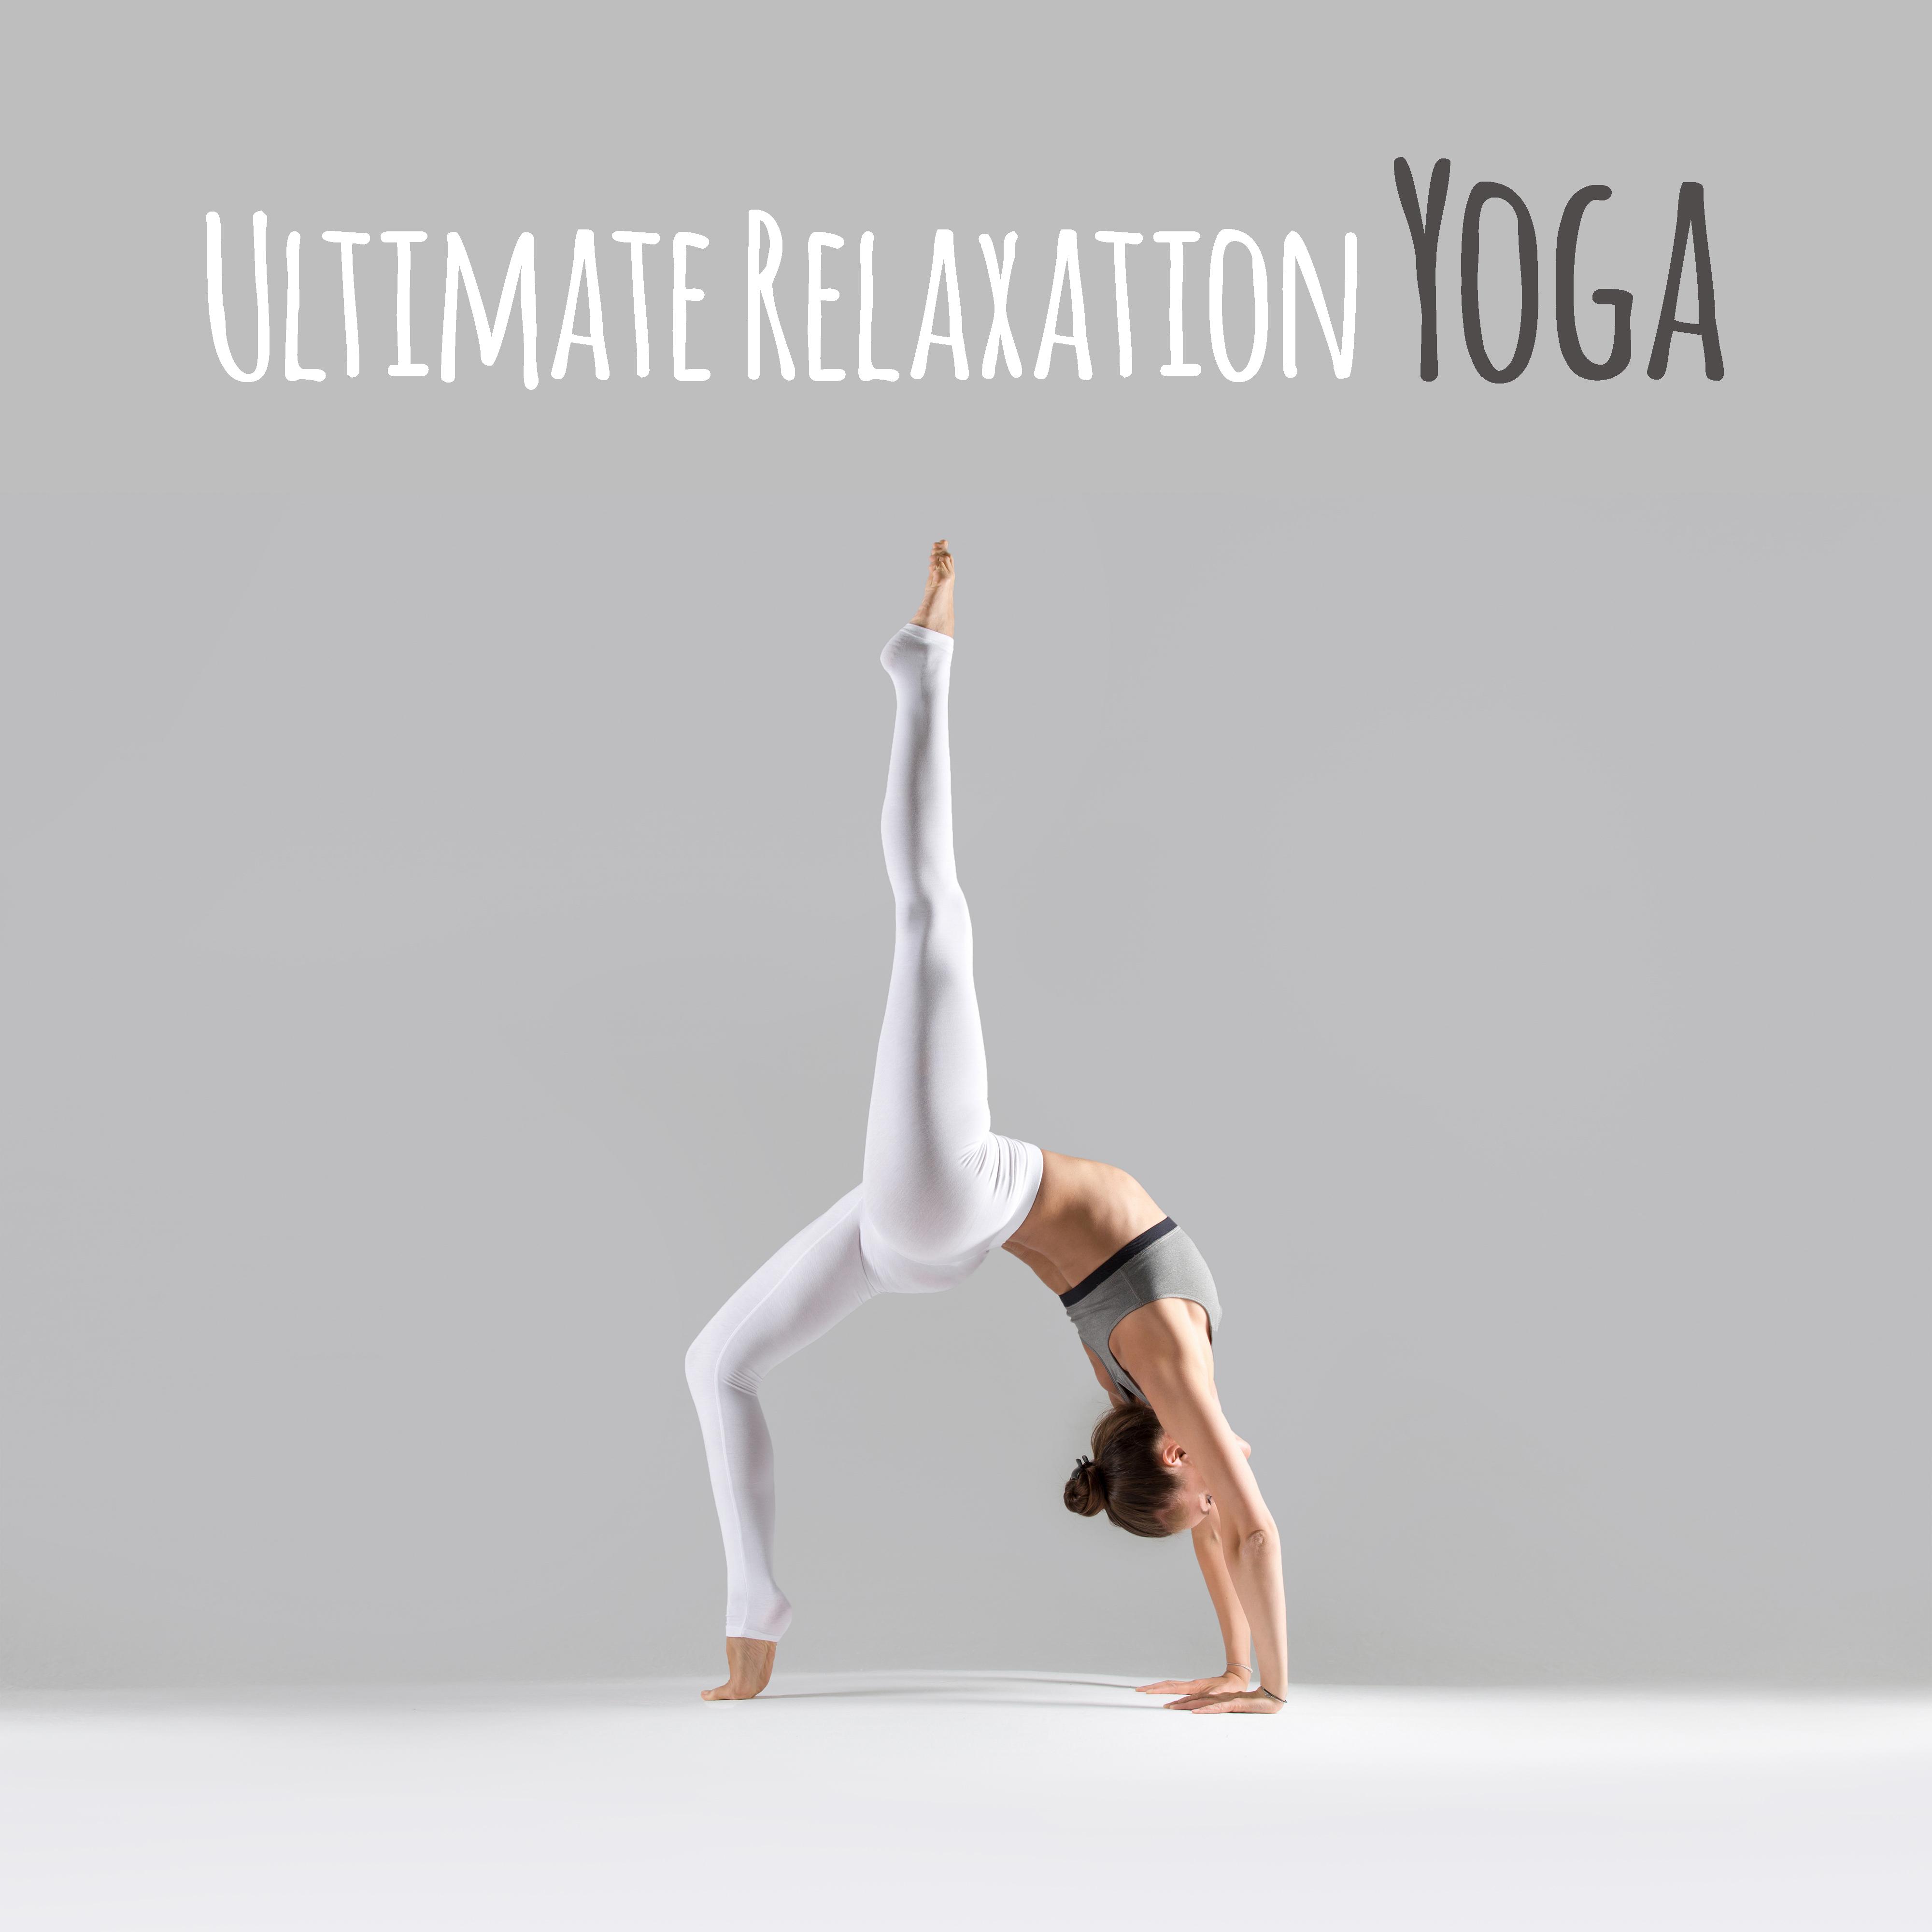 Ultimate Relaxation Yoga